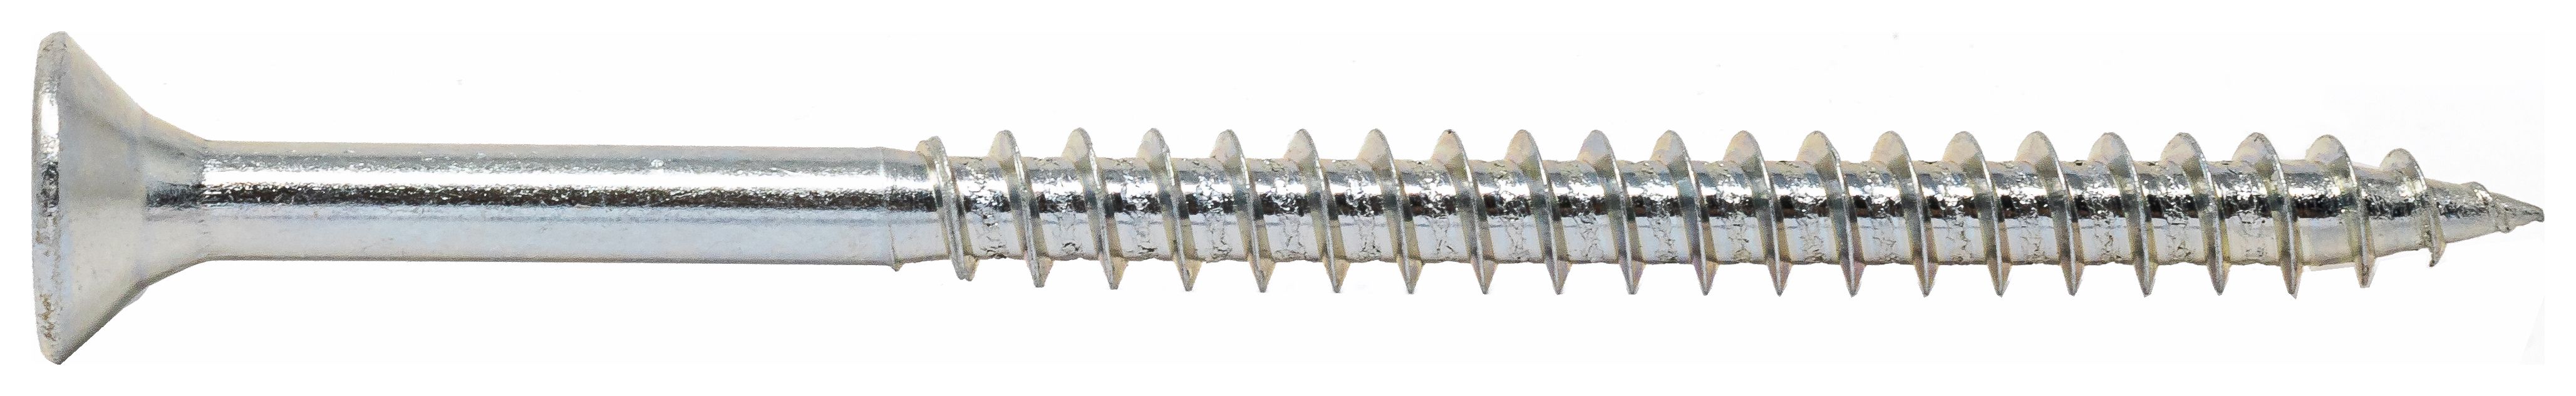 Wickes Single Thread Zinc Plated Screw - 5 X 60mm Pack Of 100